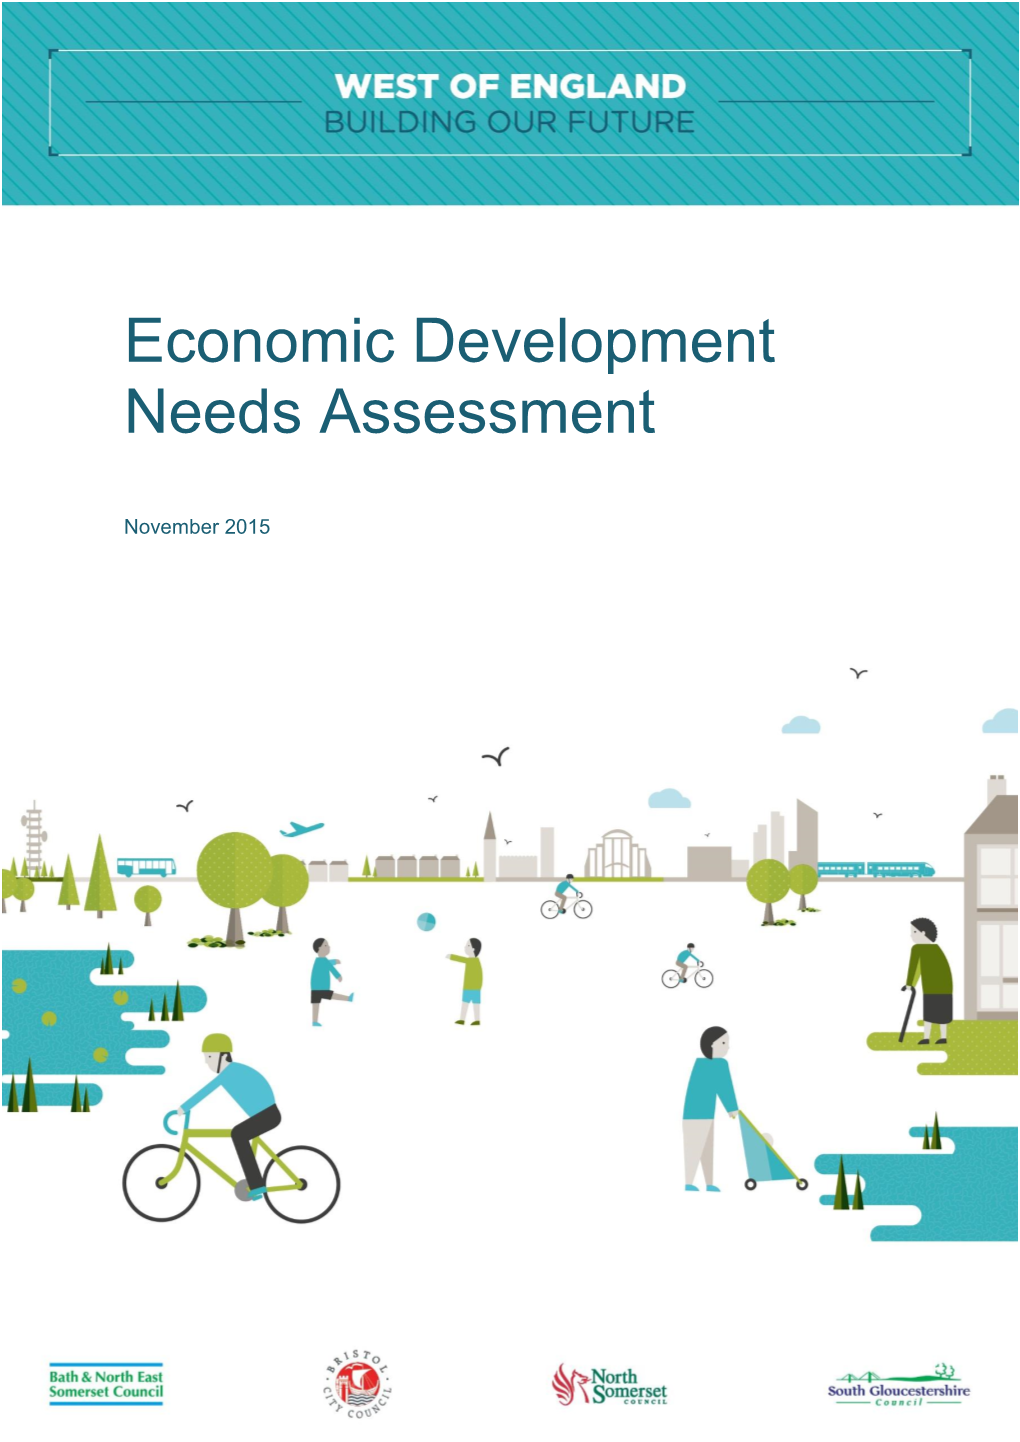 West of England Economic Development Needs Assessment (EDNA) West of England Partnership